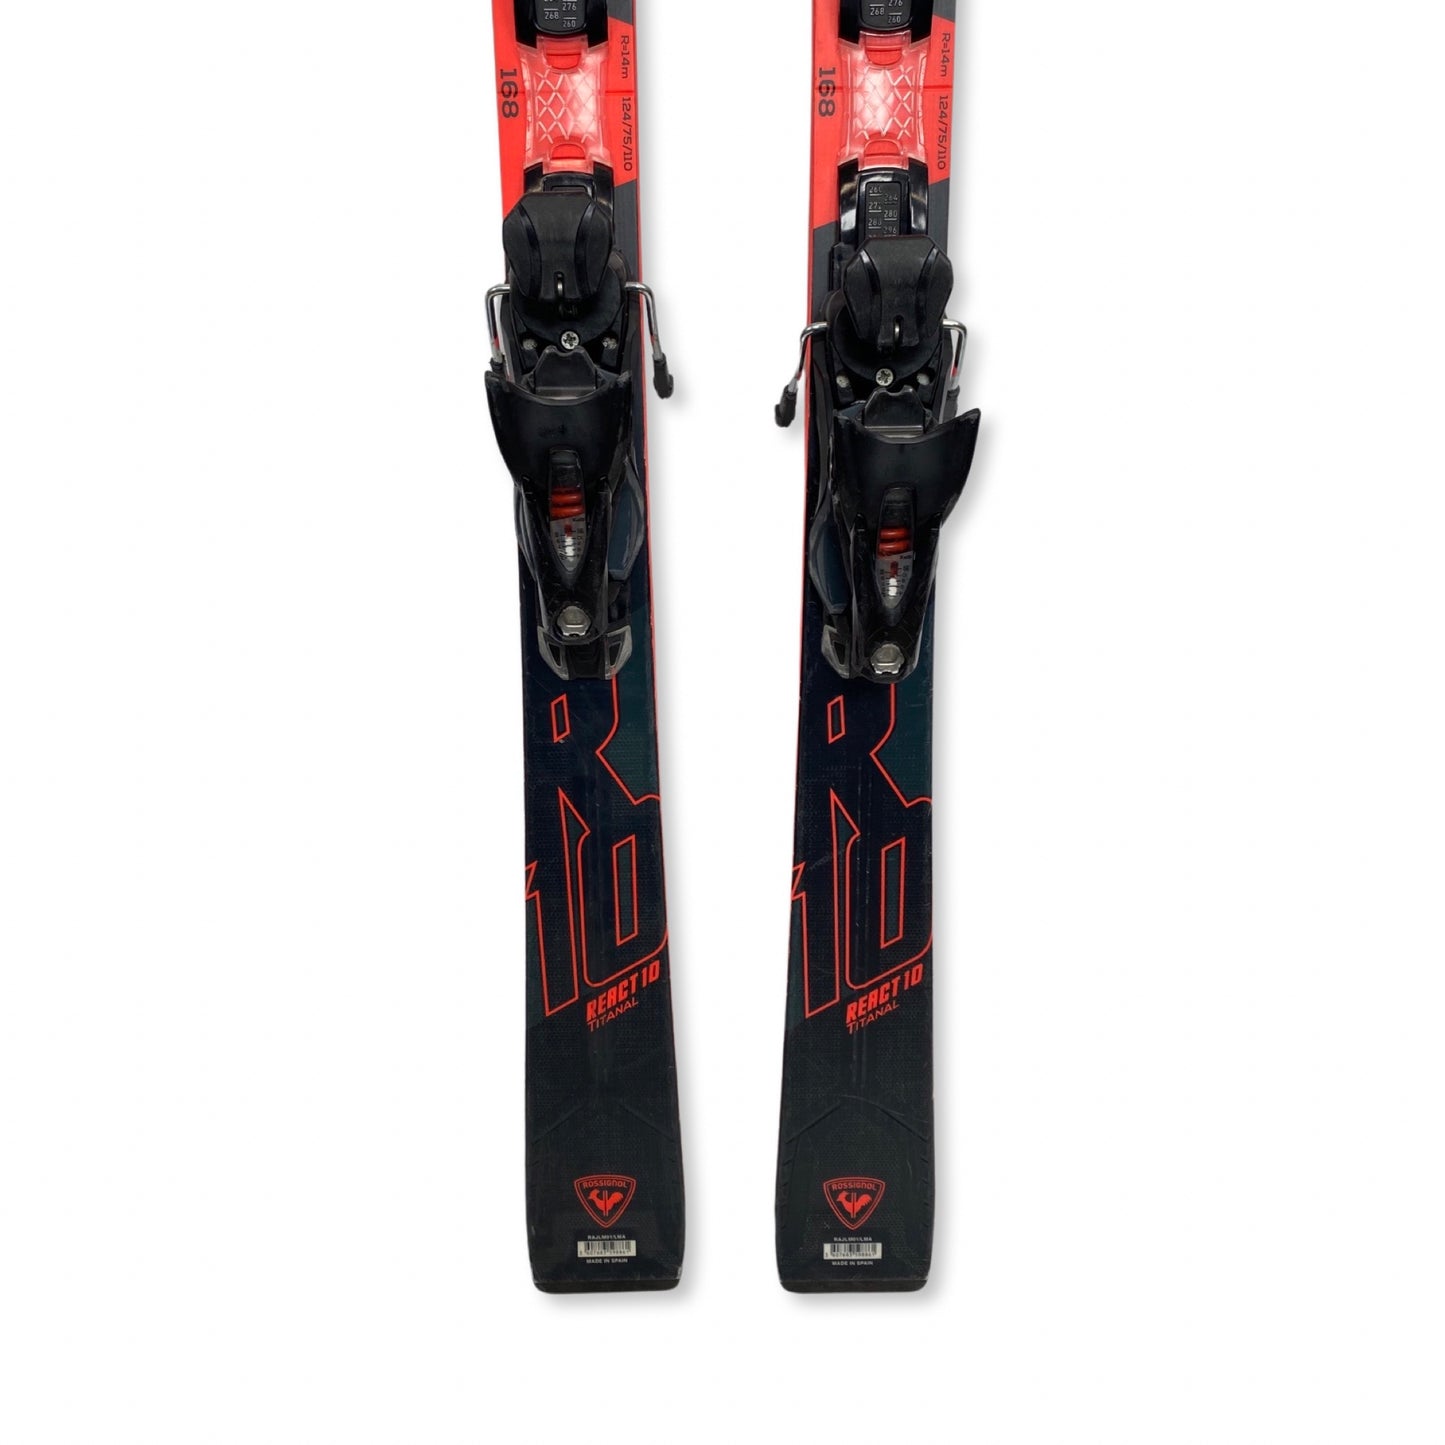 Rossignol React 10 TI Skis w/ SPX 12 GW Bindings, 168cm